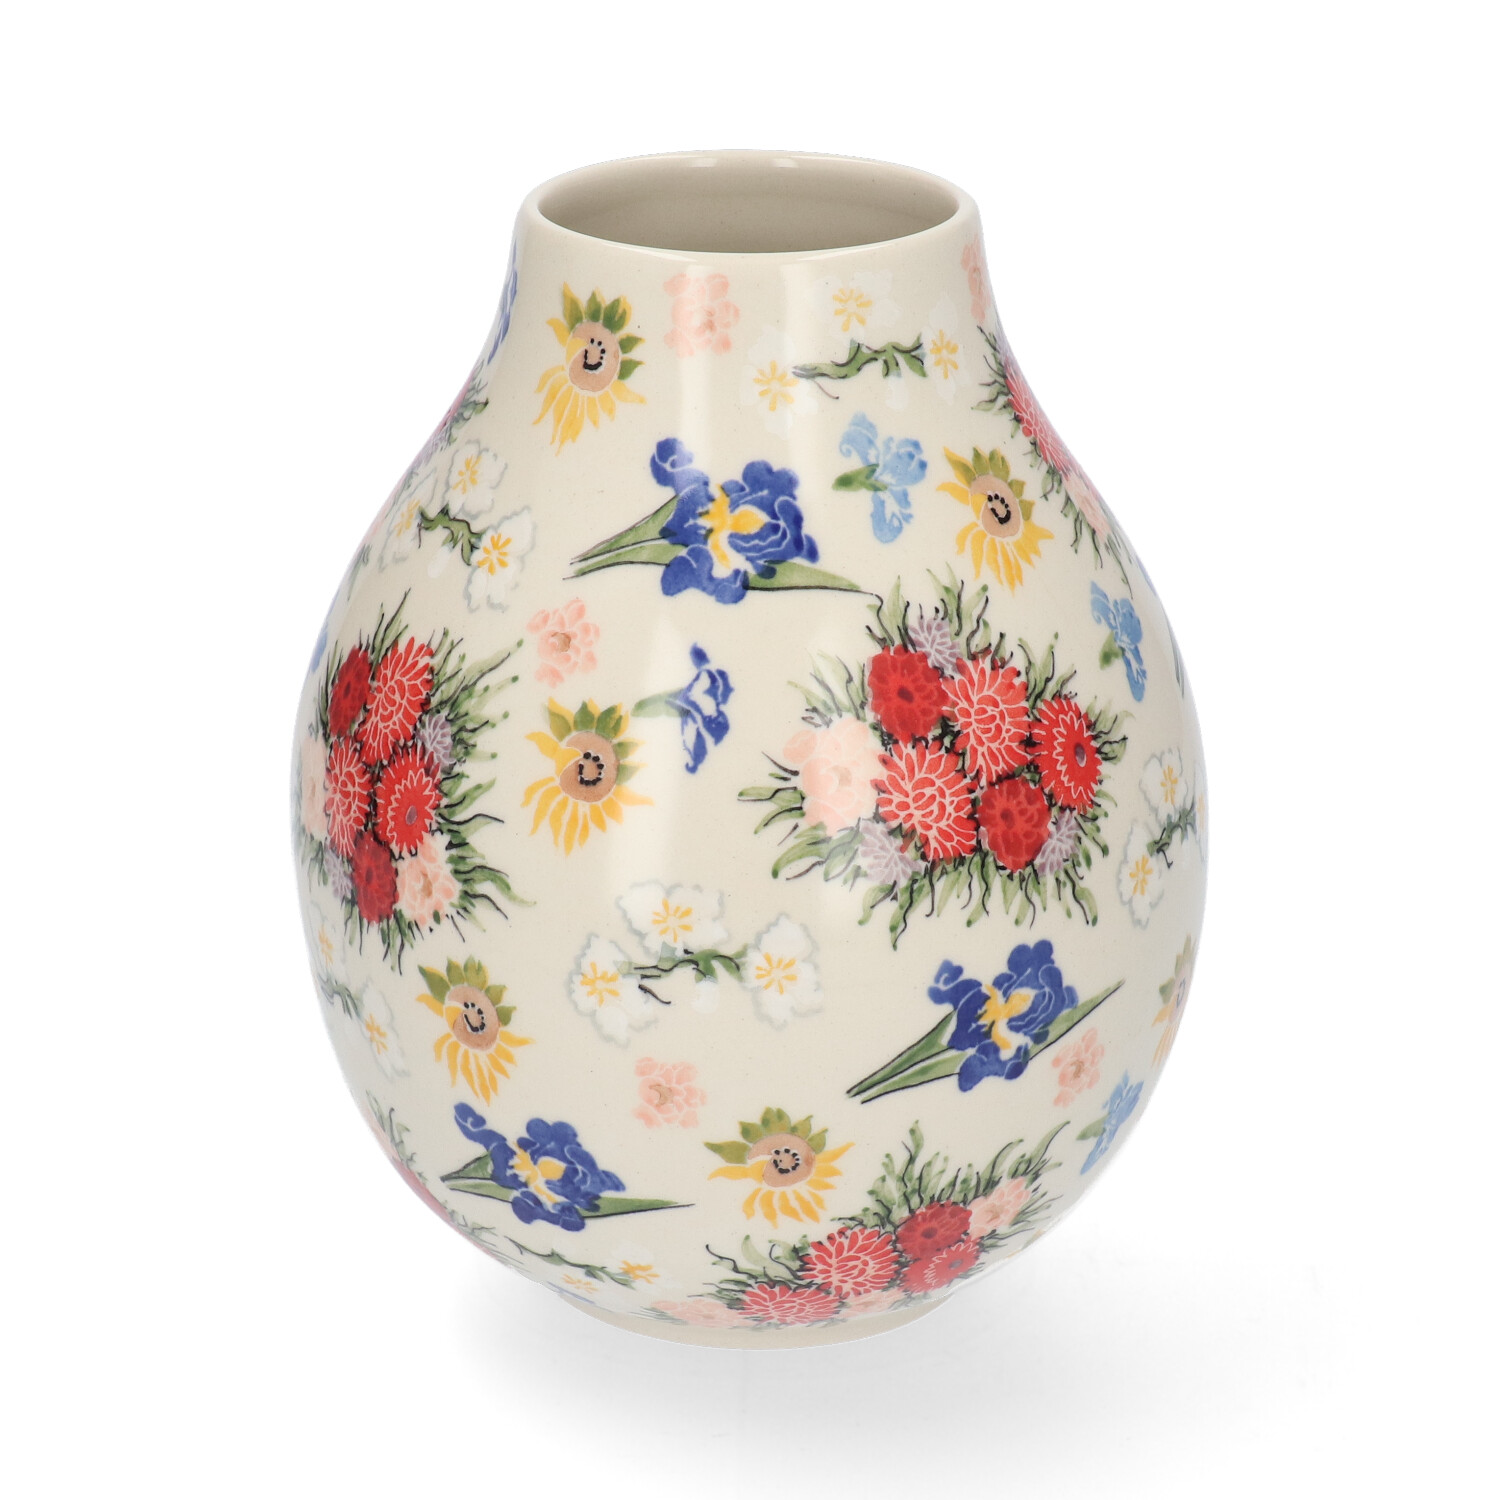 Bunzlau Castle Keramik Vase 4,4 l - van Gogh 50th Anniversary